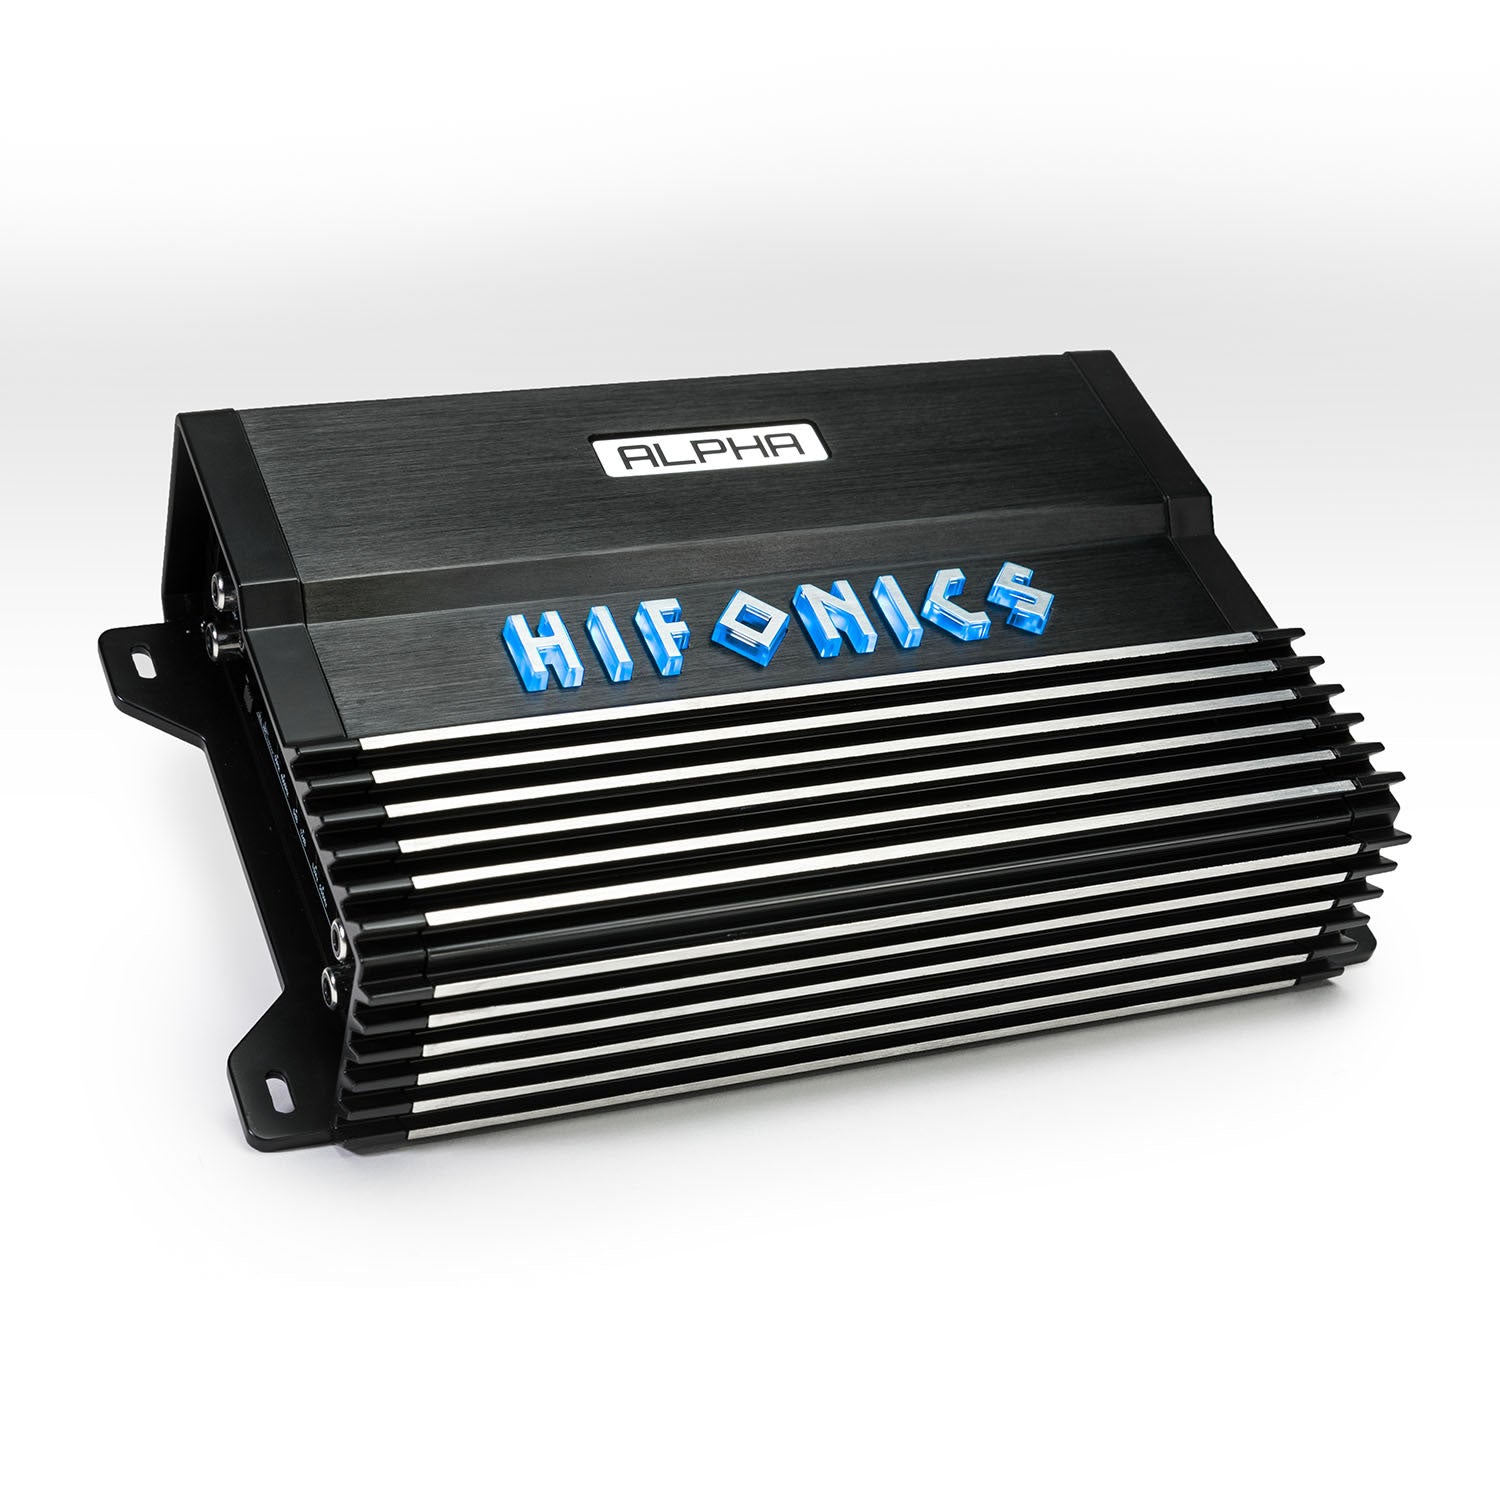 Hifonics 800w - 4 Ch. Amplifier Full Range Super D-Class Amp